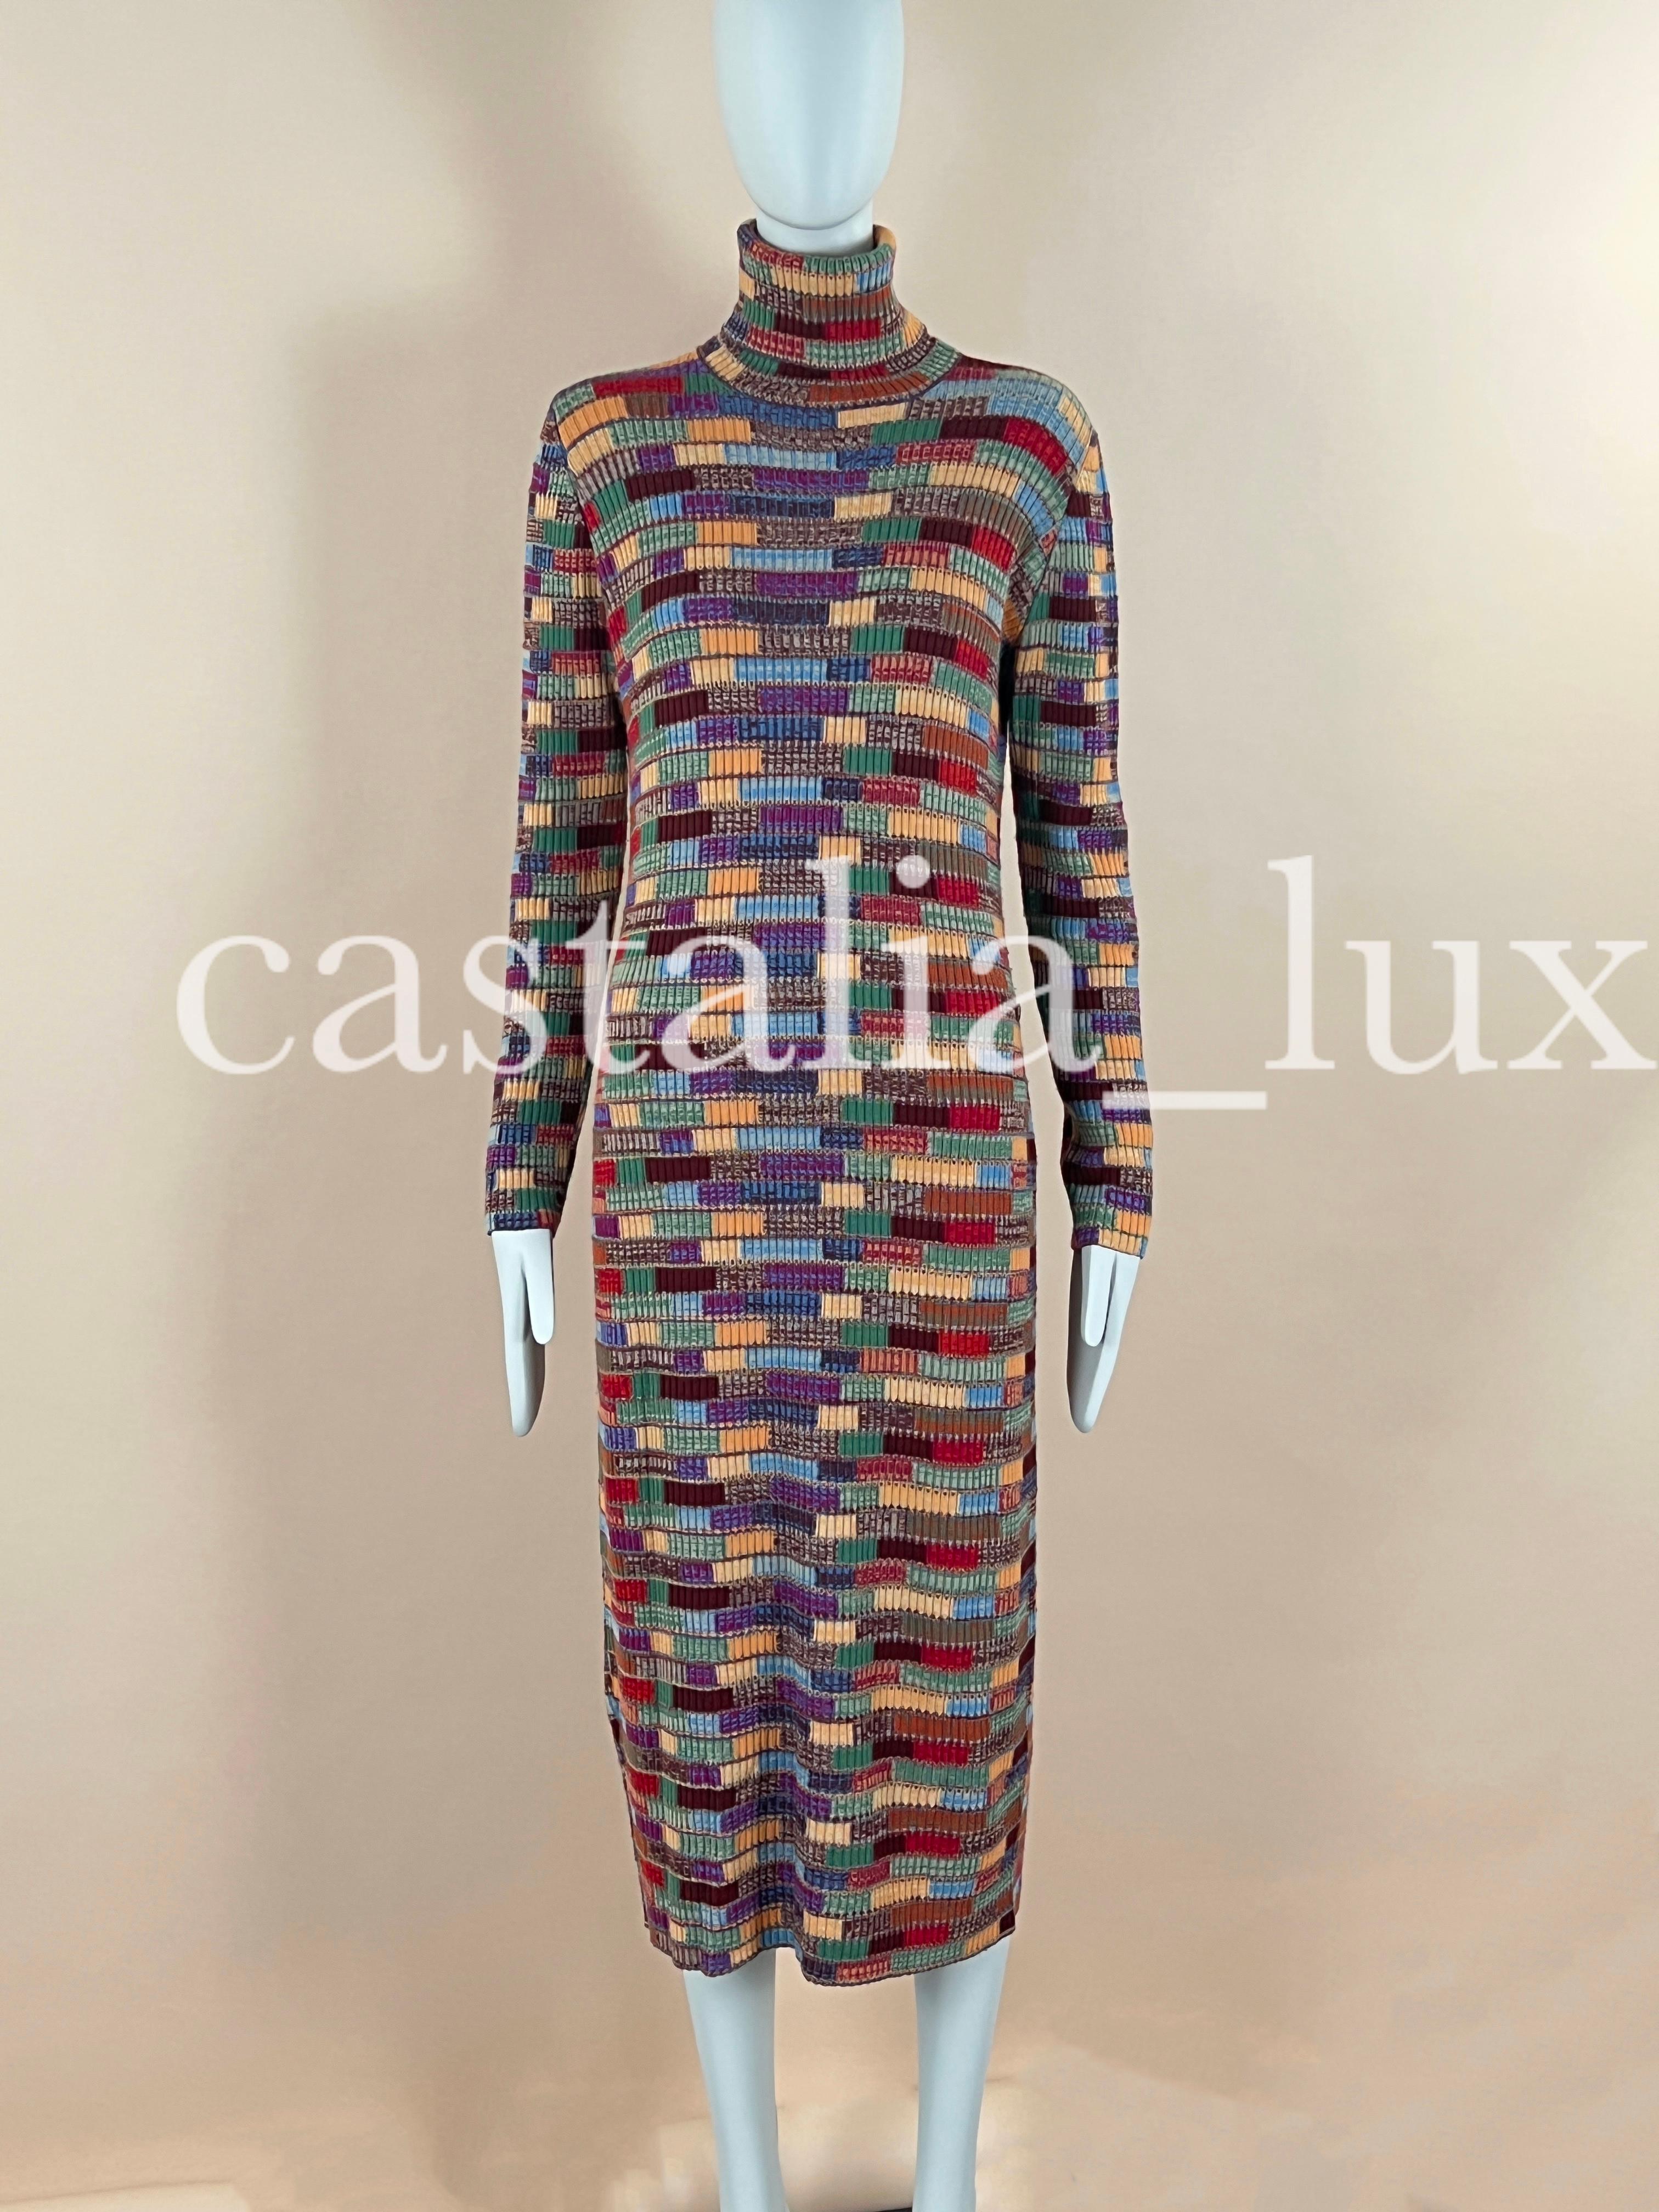 Chanel J Lo Style Paris / Hamburg Runway Cashmere Dress For Sale 3